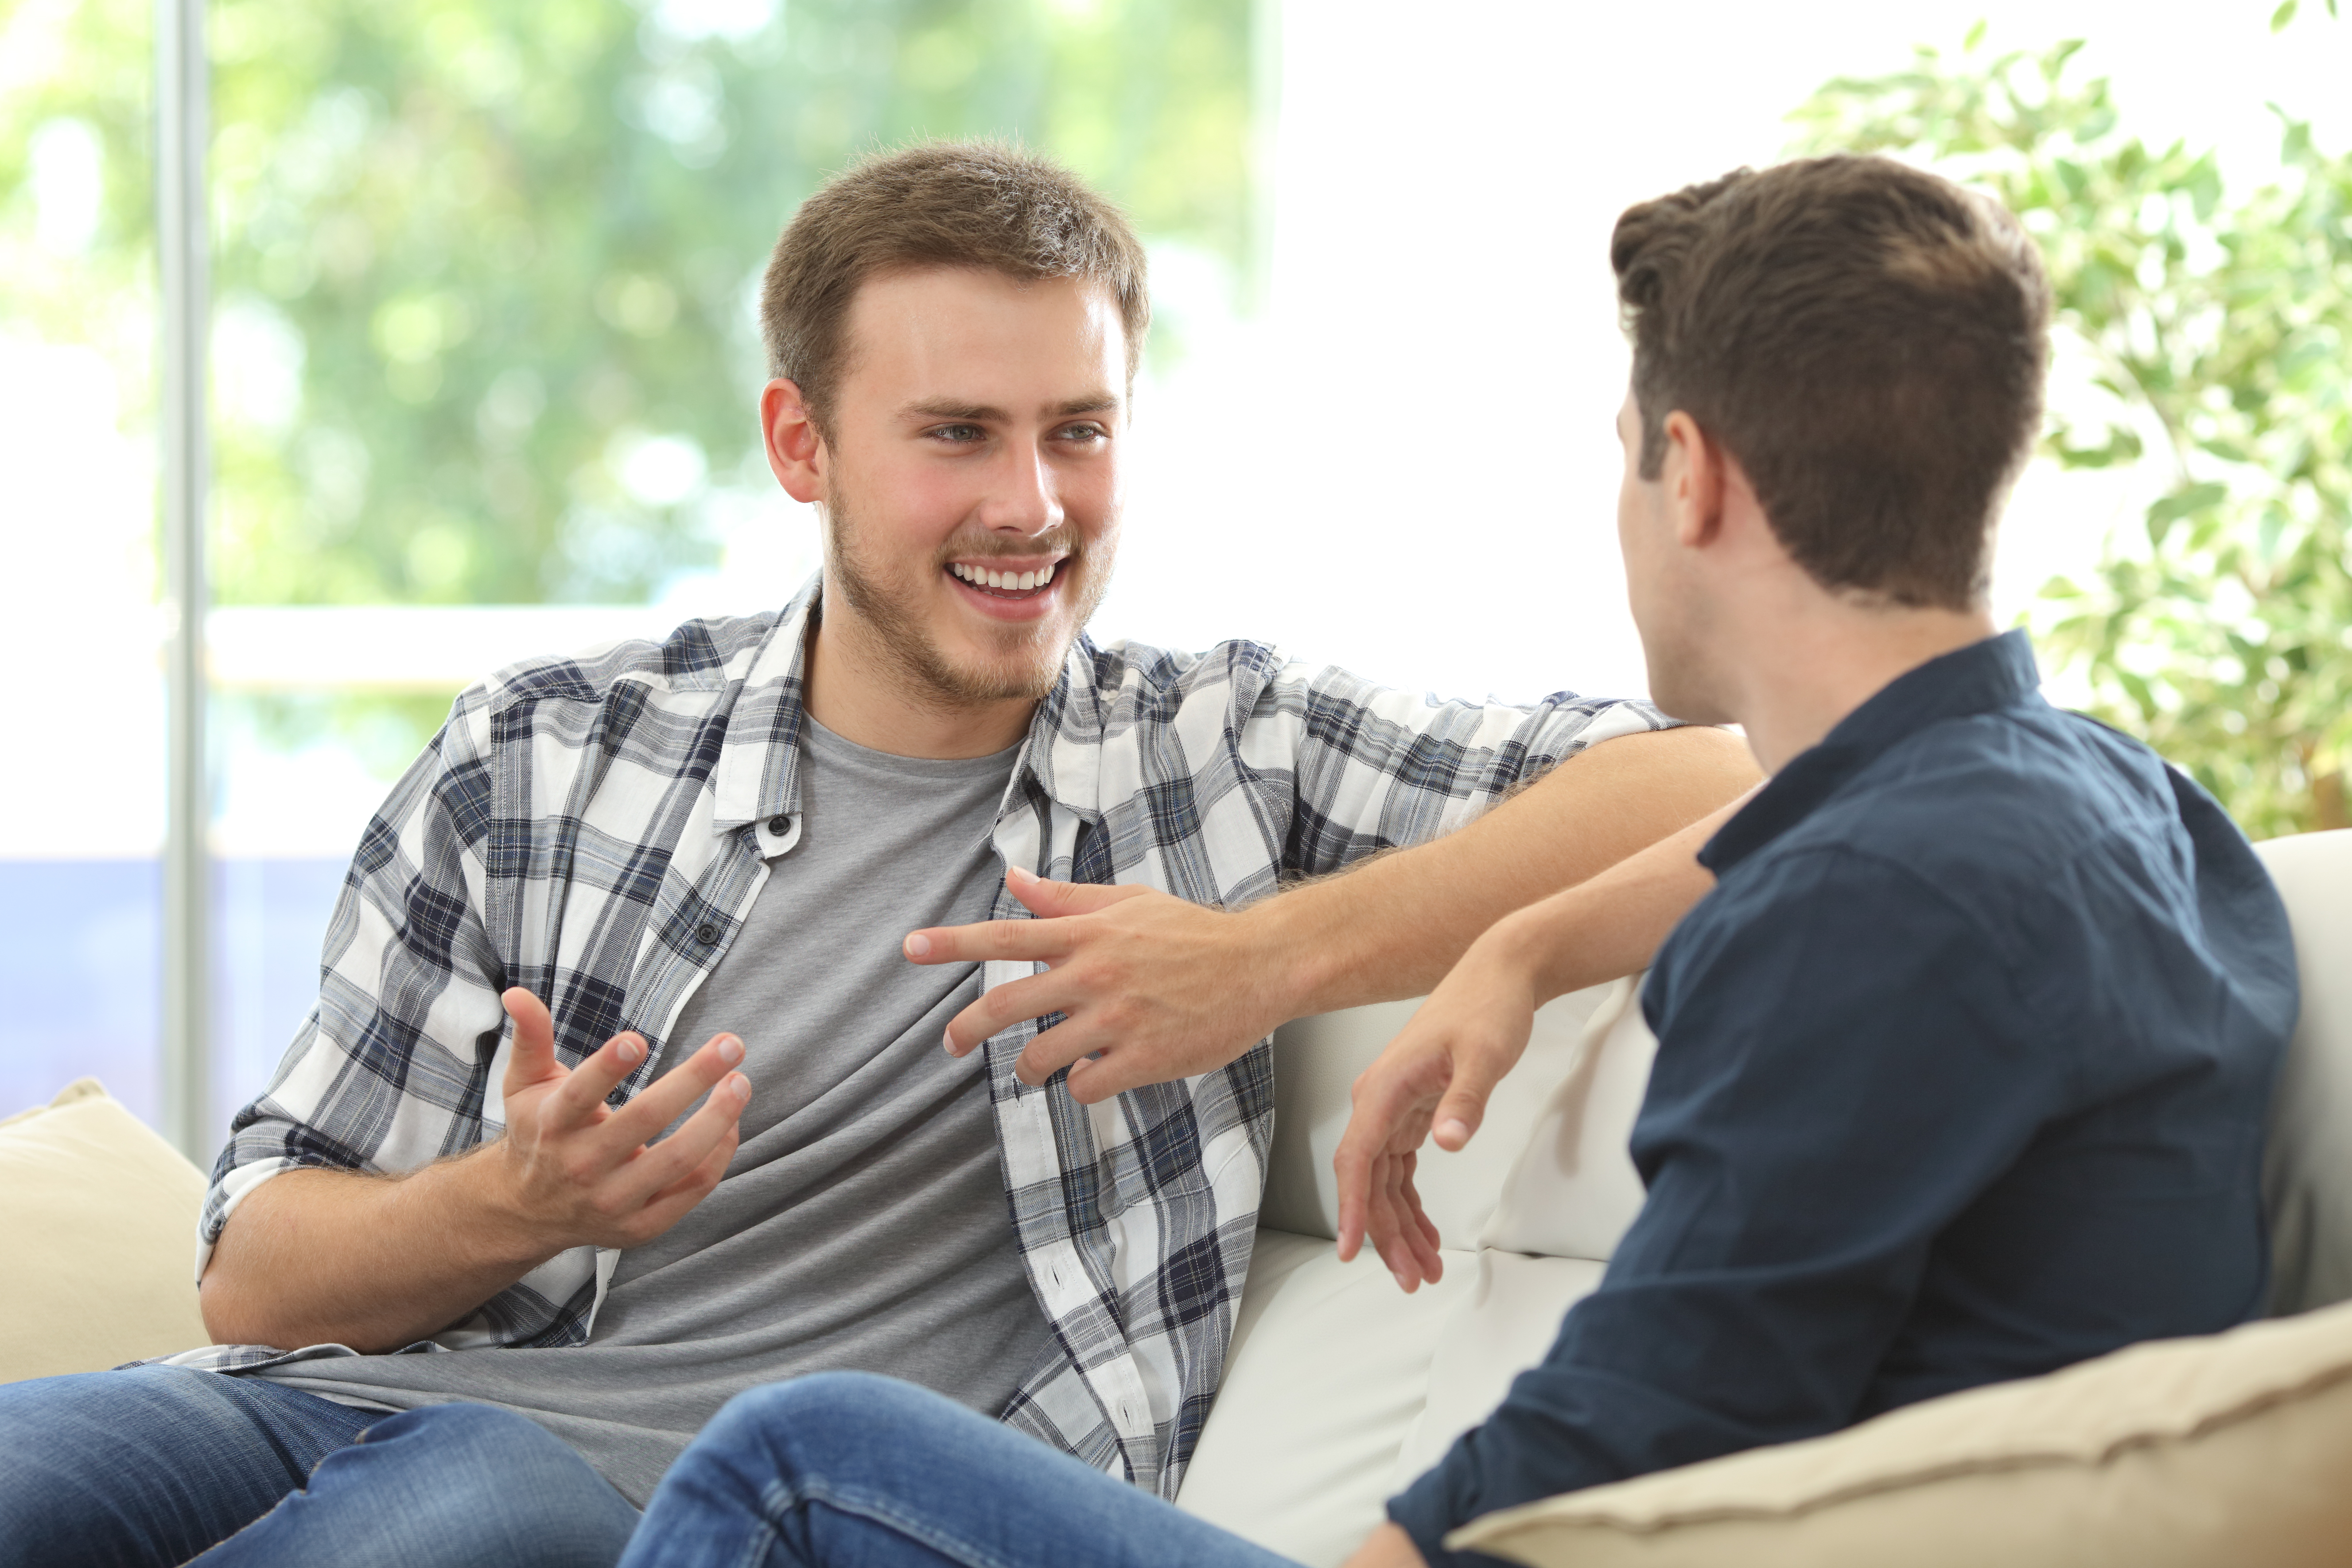 Two men having a conversation | Source: Shutterstock